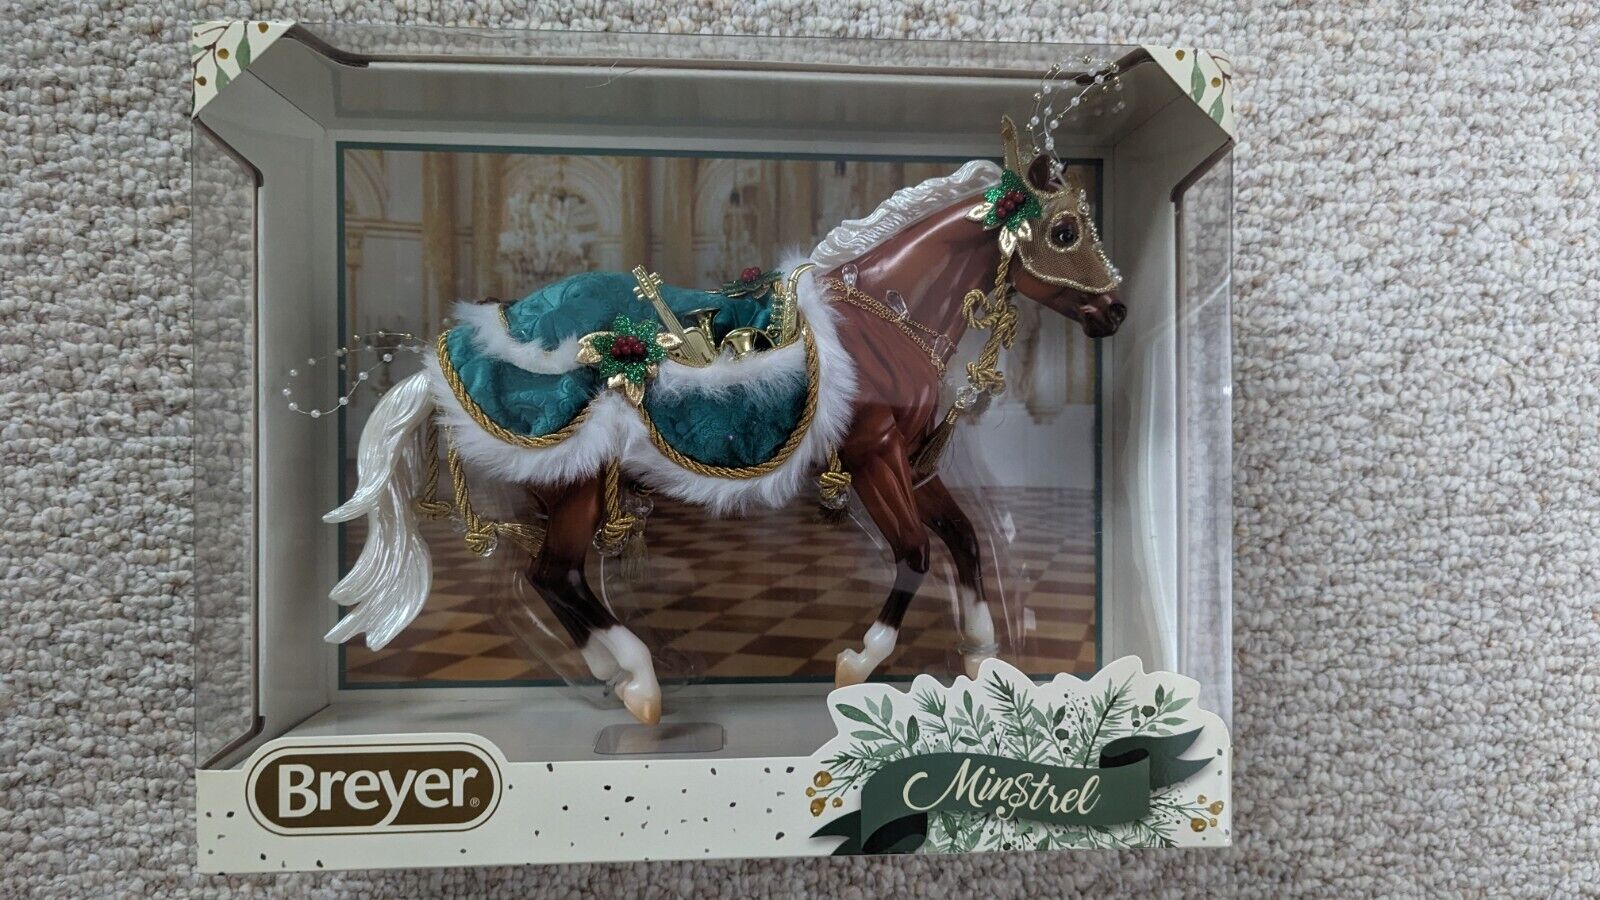 Breyer Traditional Model #700122 “Minstrel” 2019 Christmas Holiday Horse NiB